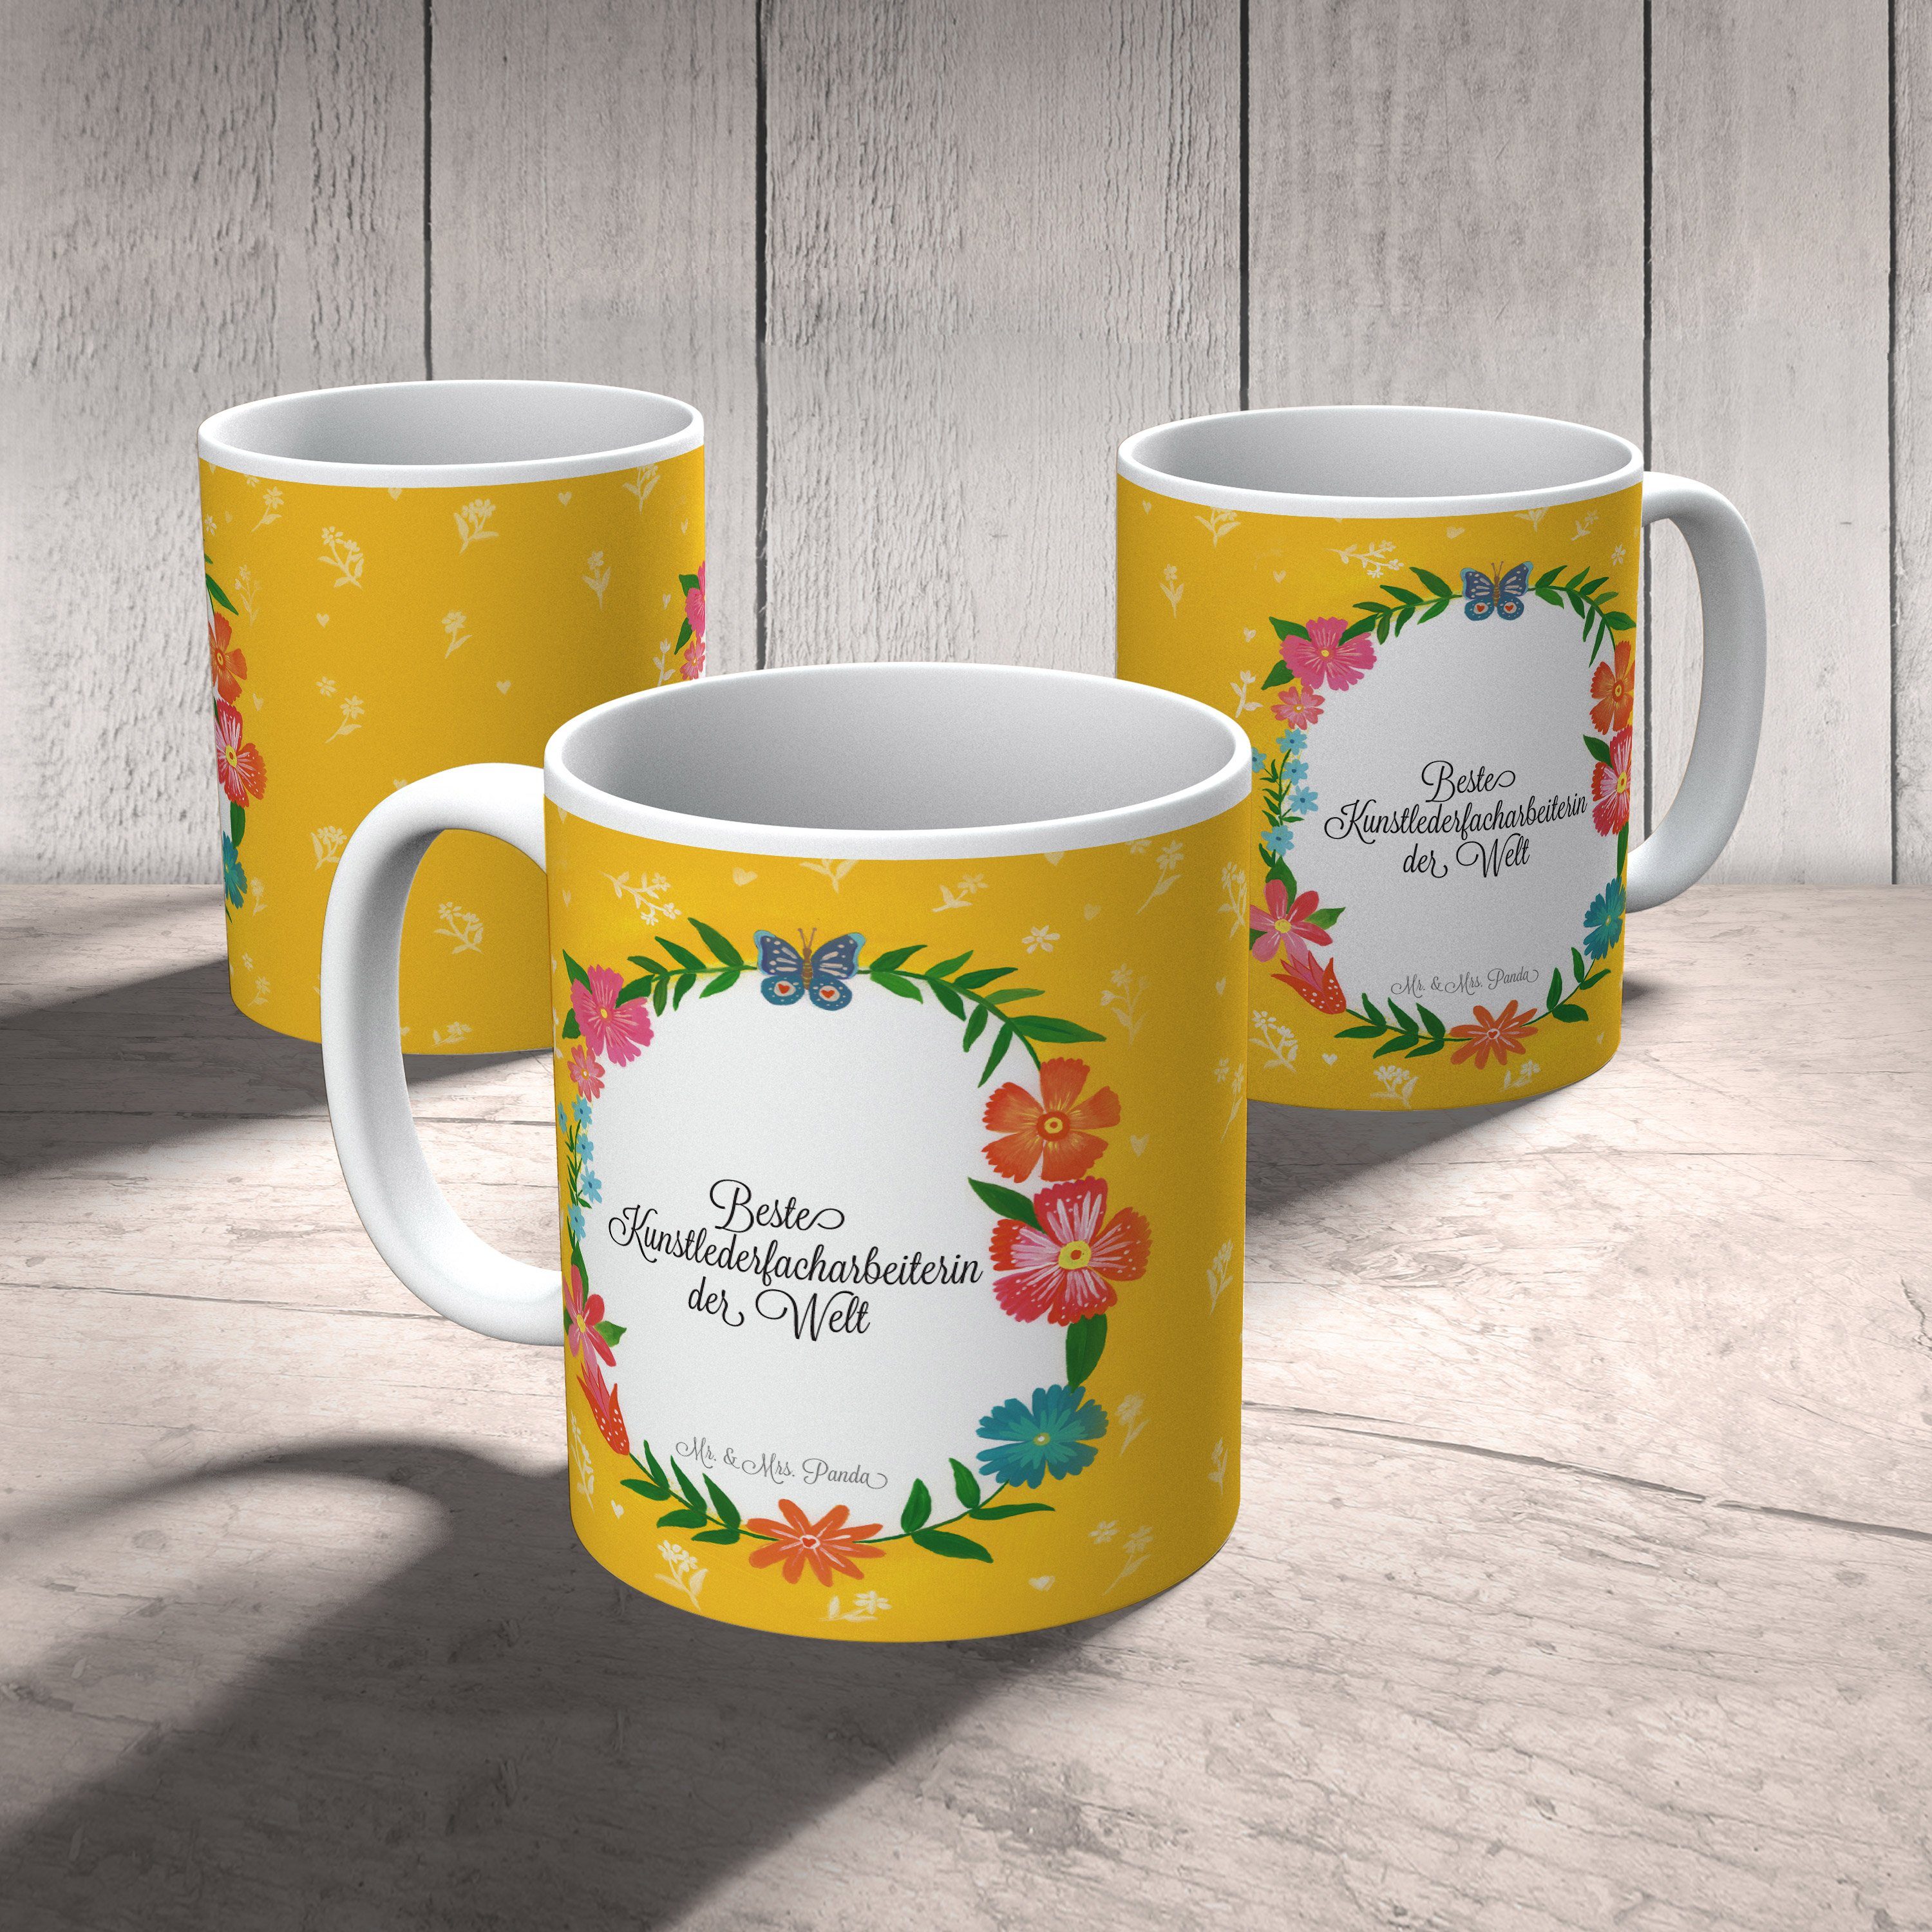 Mr. & Mrs. Panda Geschenk, - Kaffeebec, Porzellantasse, Tasse, Keramik Tasse Kunstlederfacharbeiterin